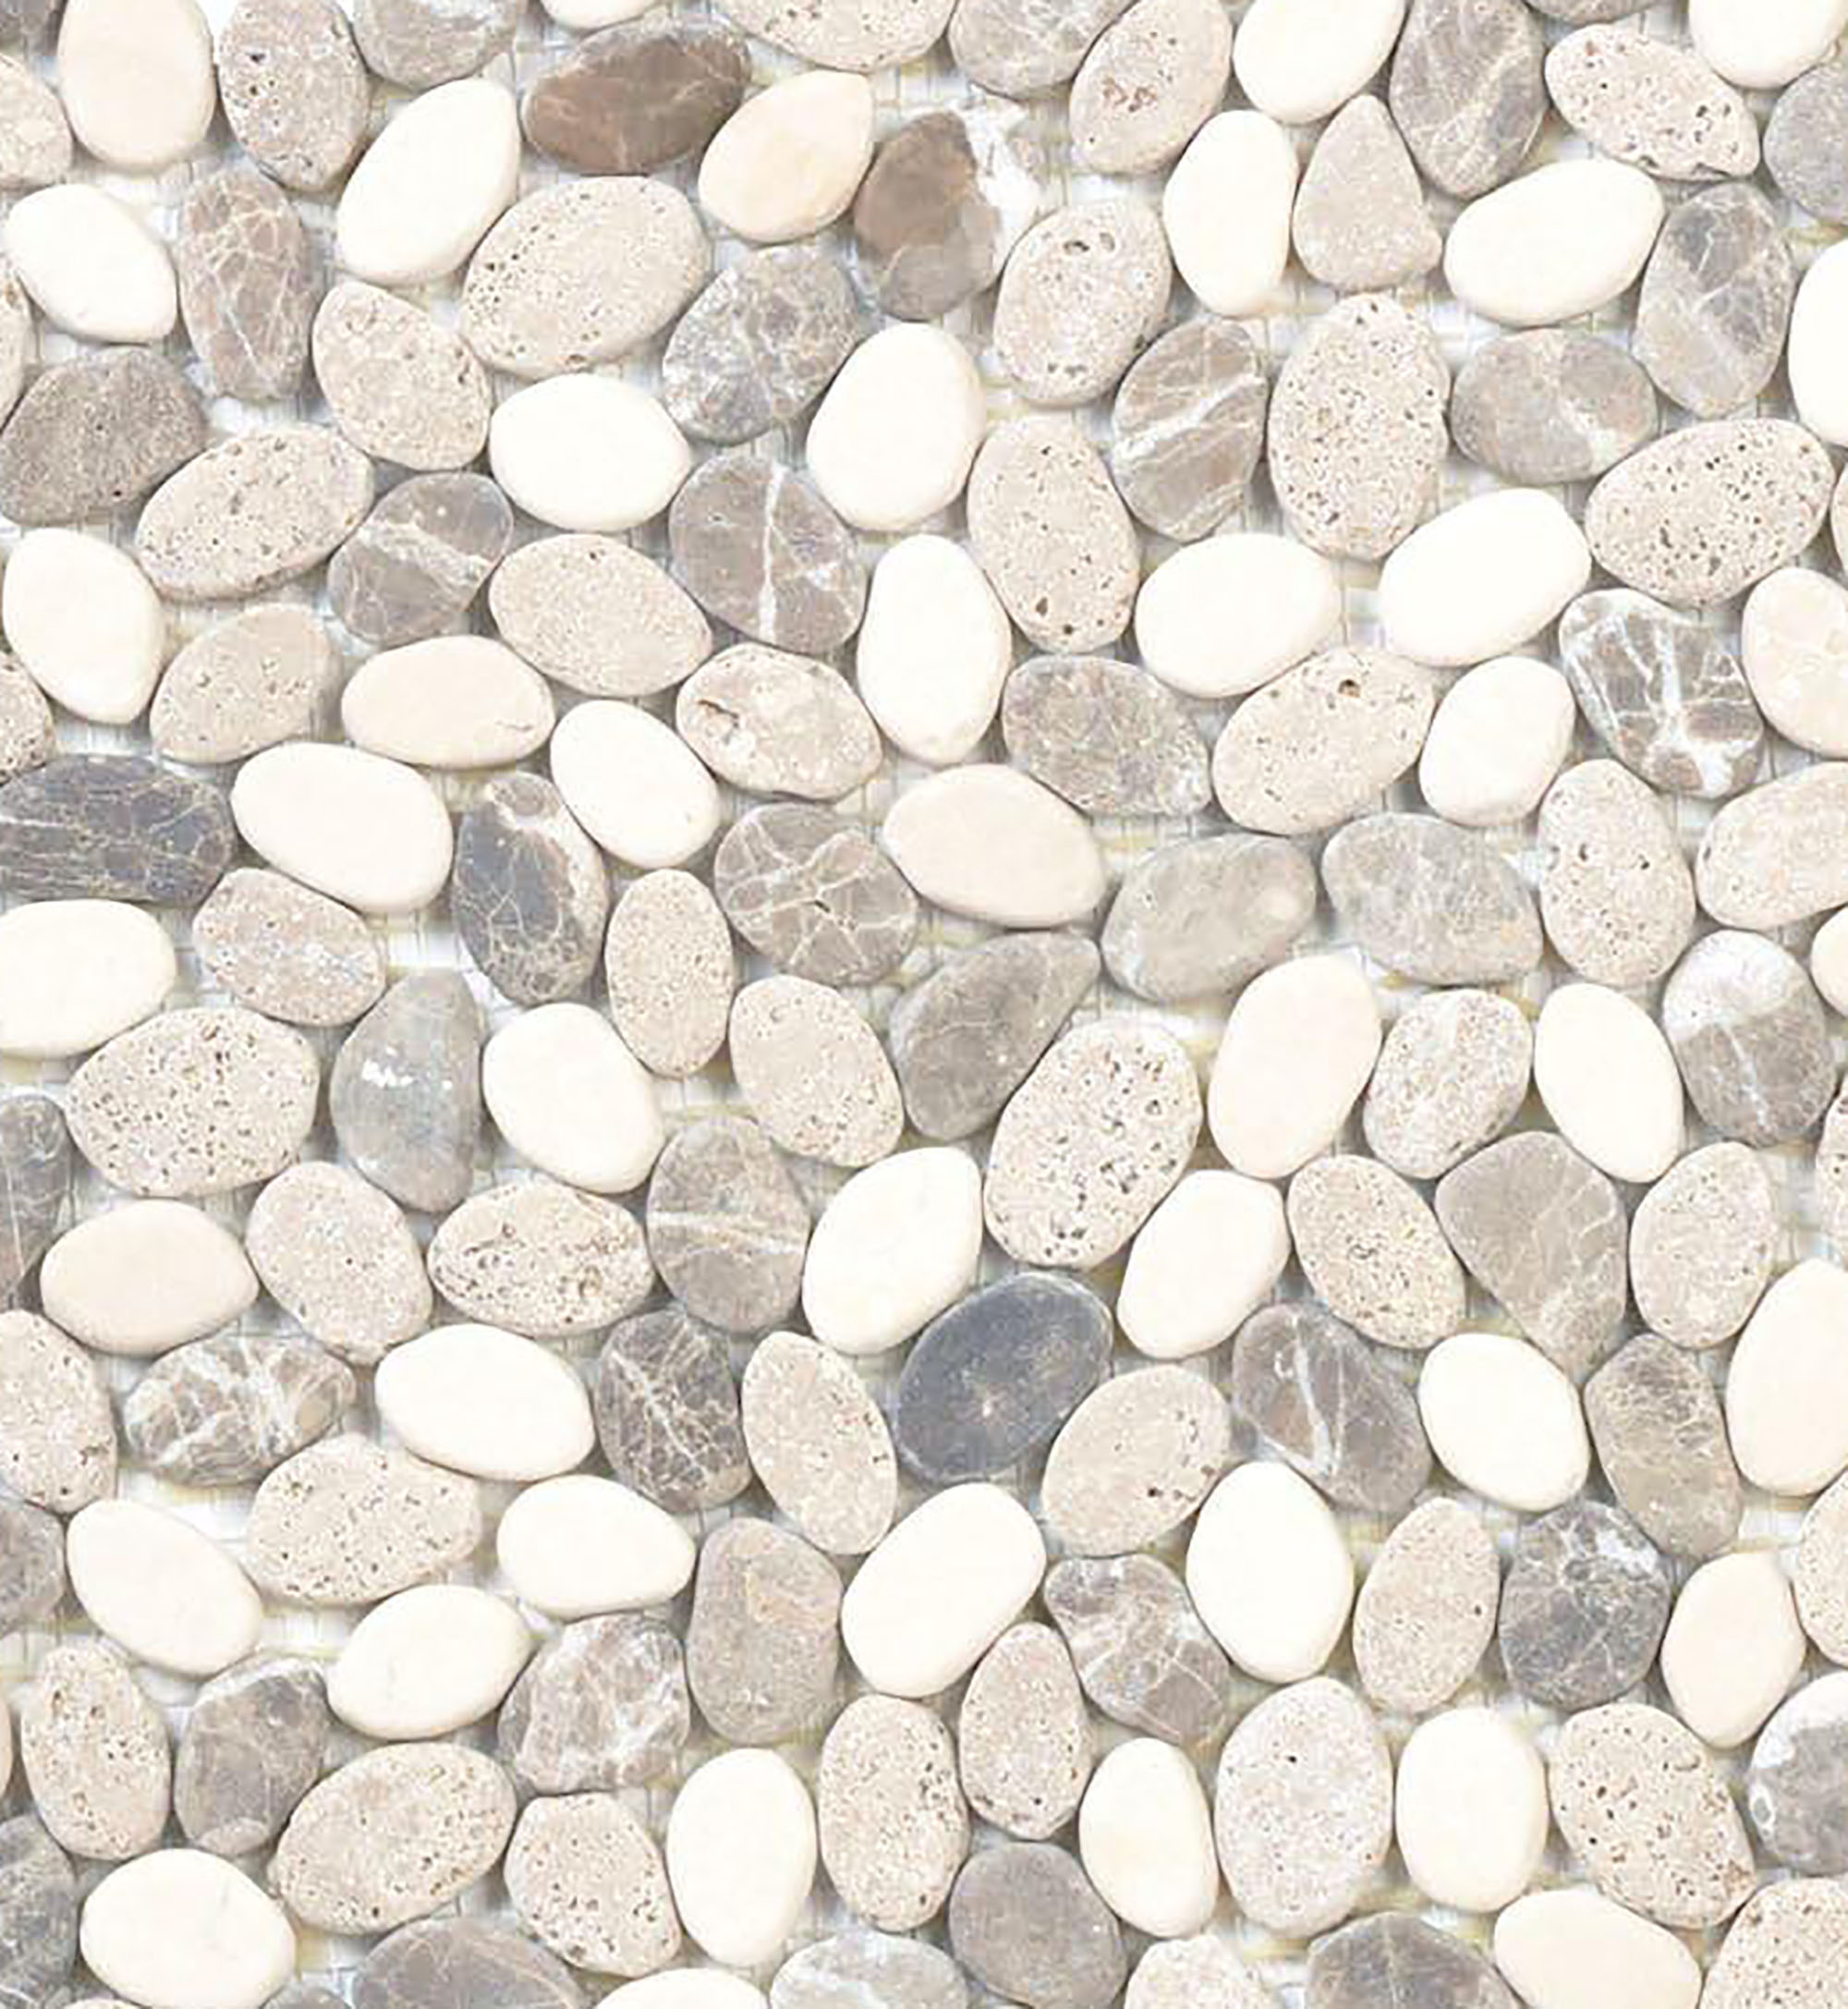 Pebble Shower Floors Just Say No, Pebble Stone Tile For Shower Floor